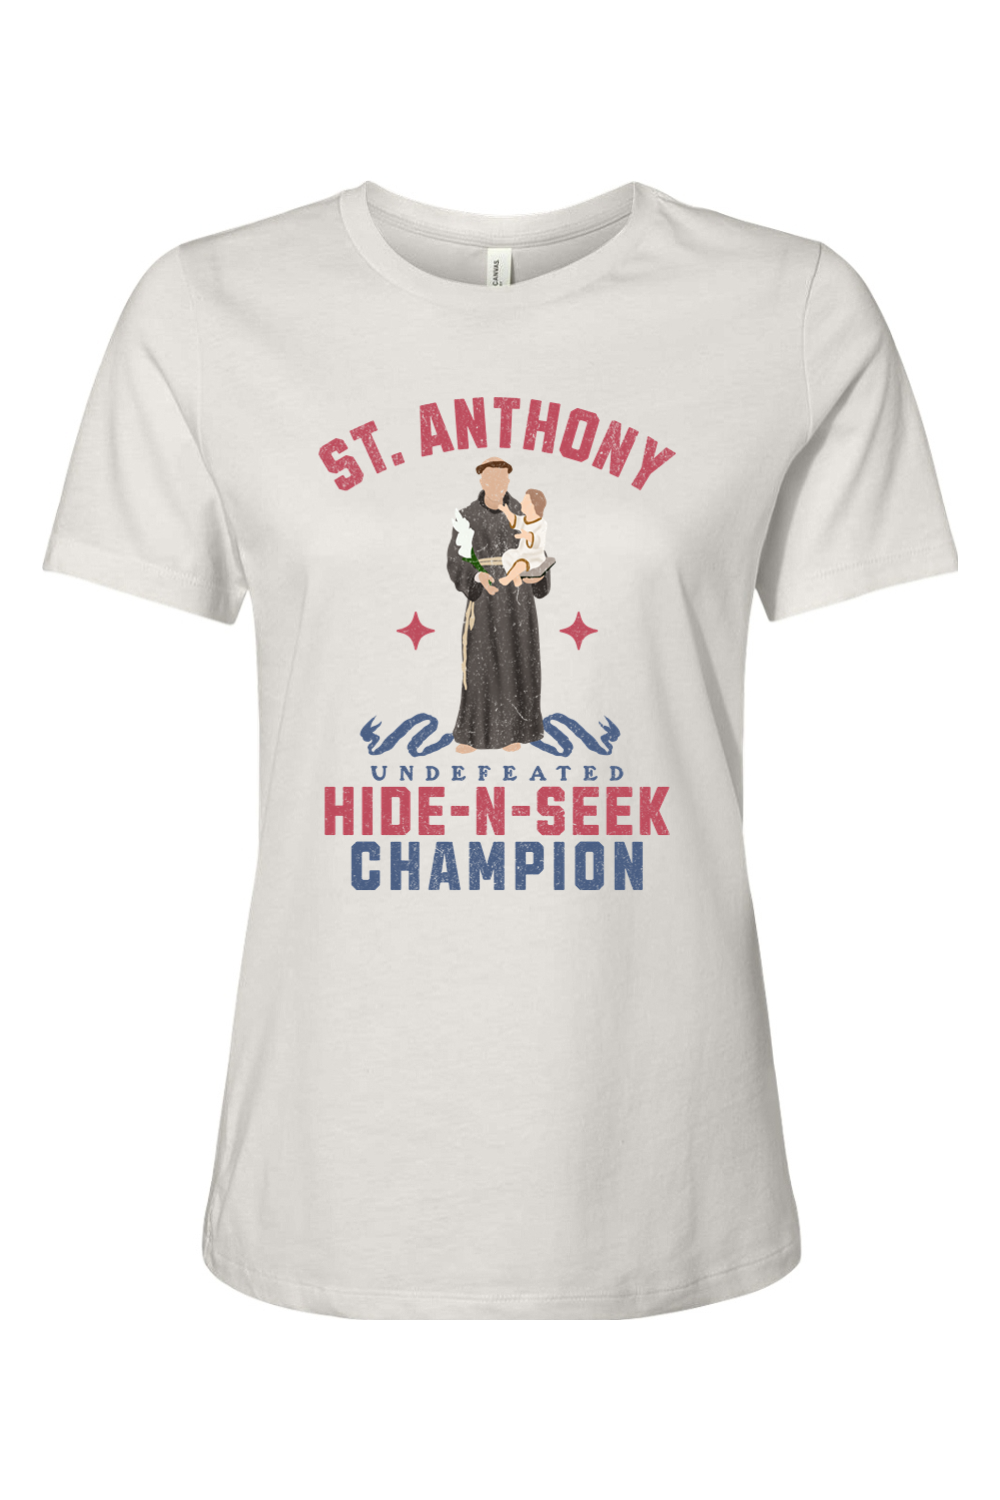 St. Anthony - Undefeated Hide -N- Seek Champion - Ladies Tee